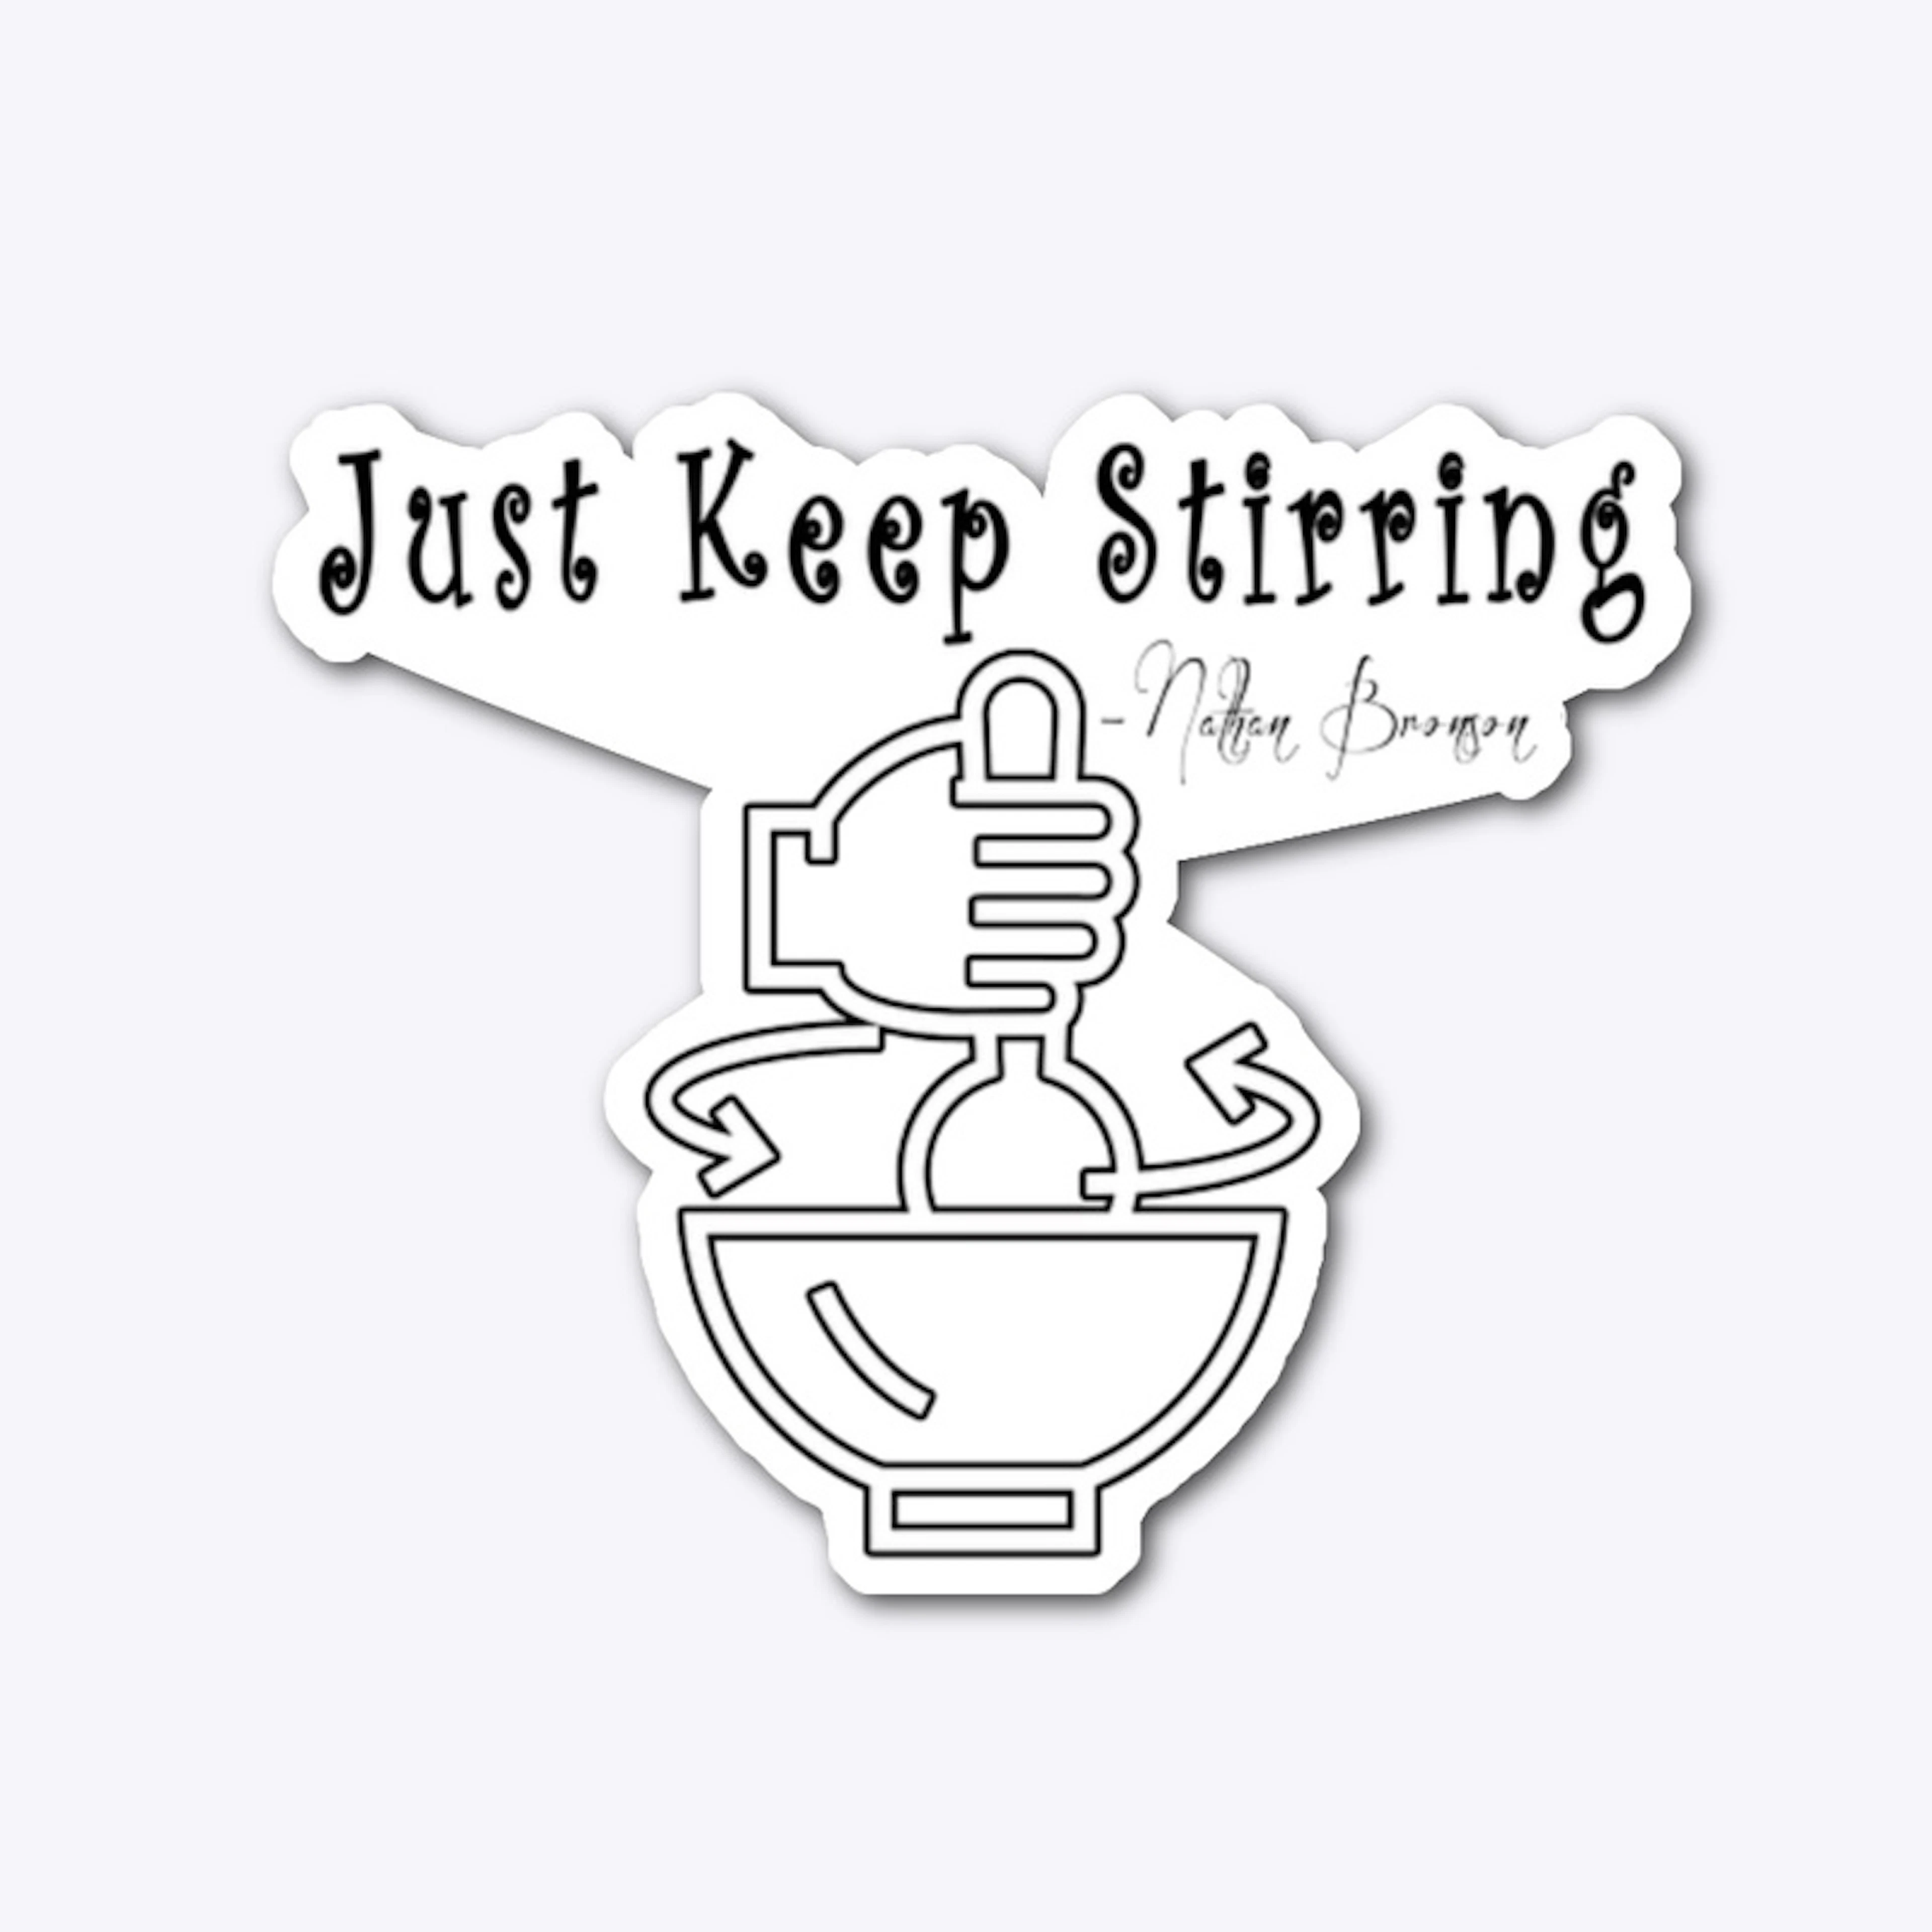 Just Keep stirring